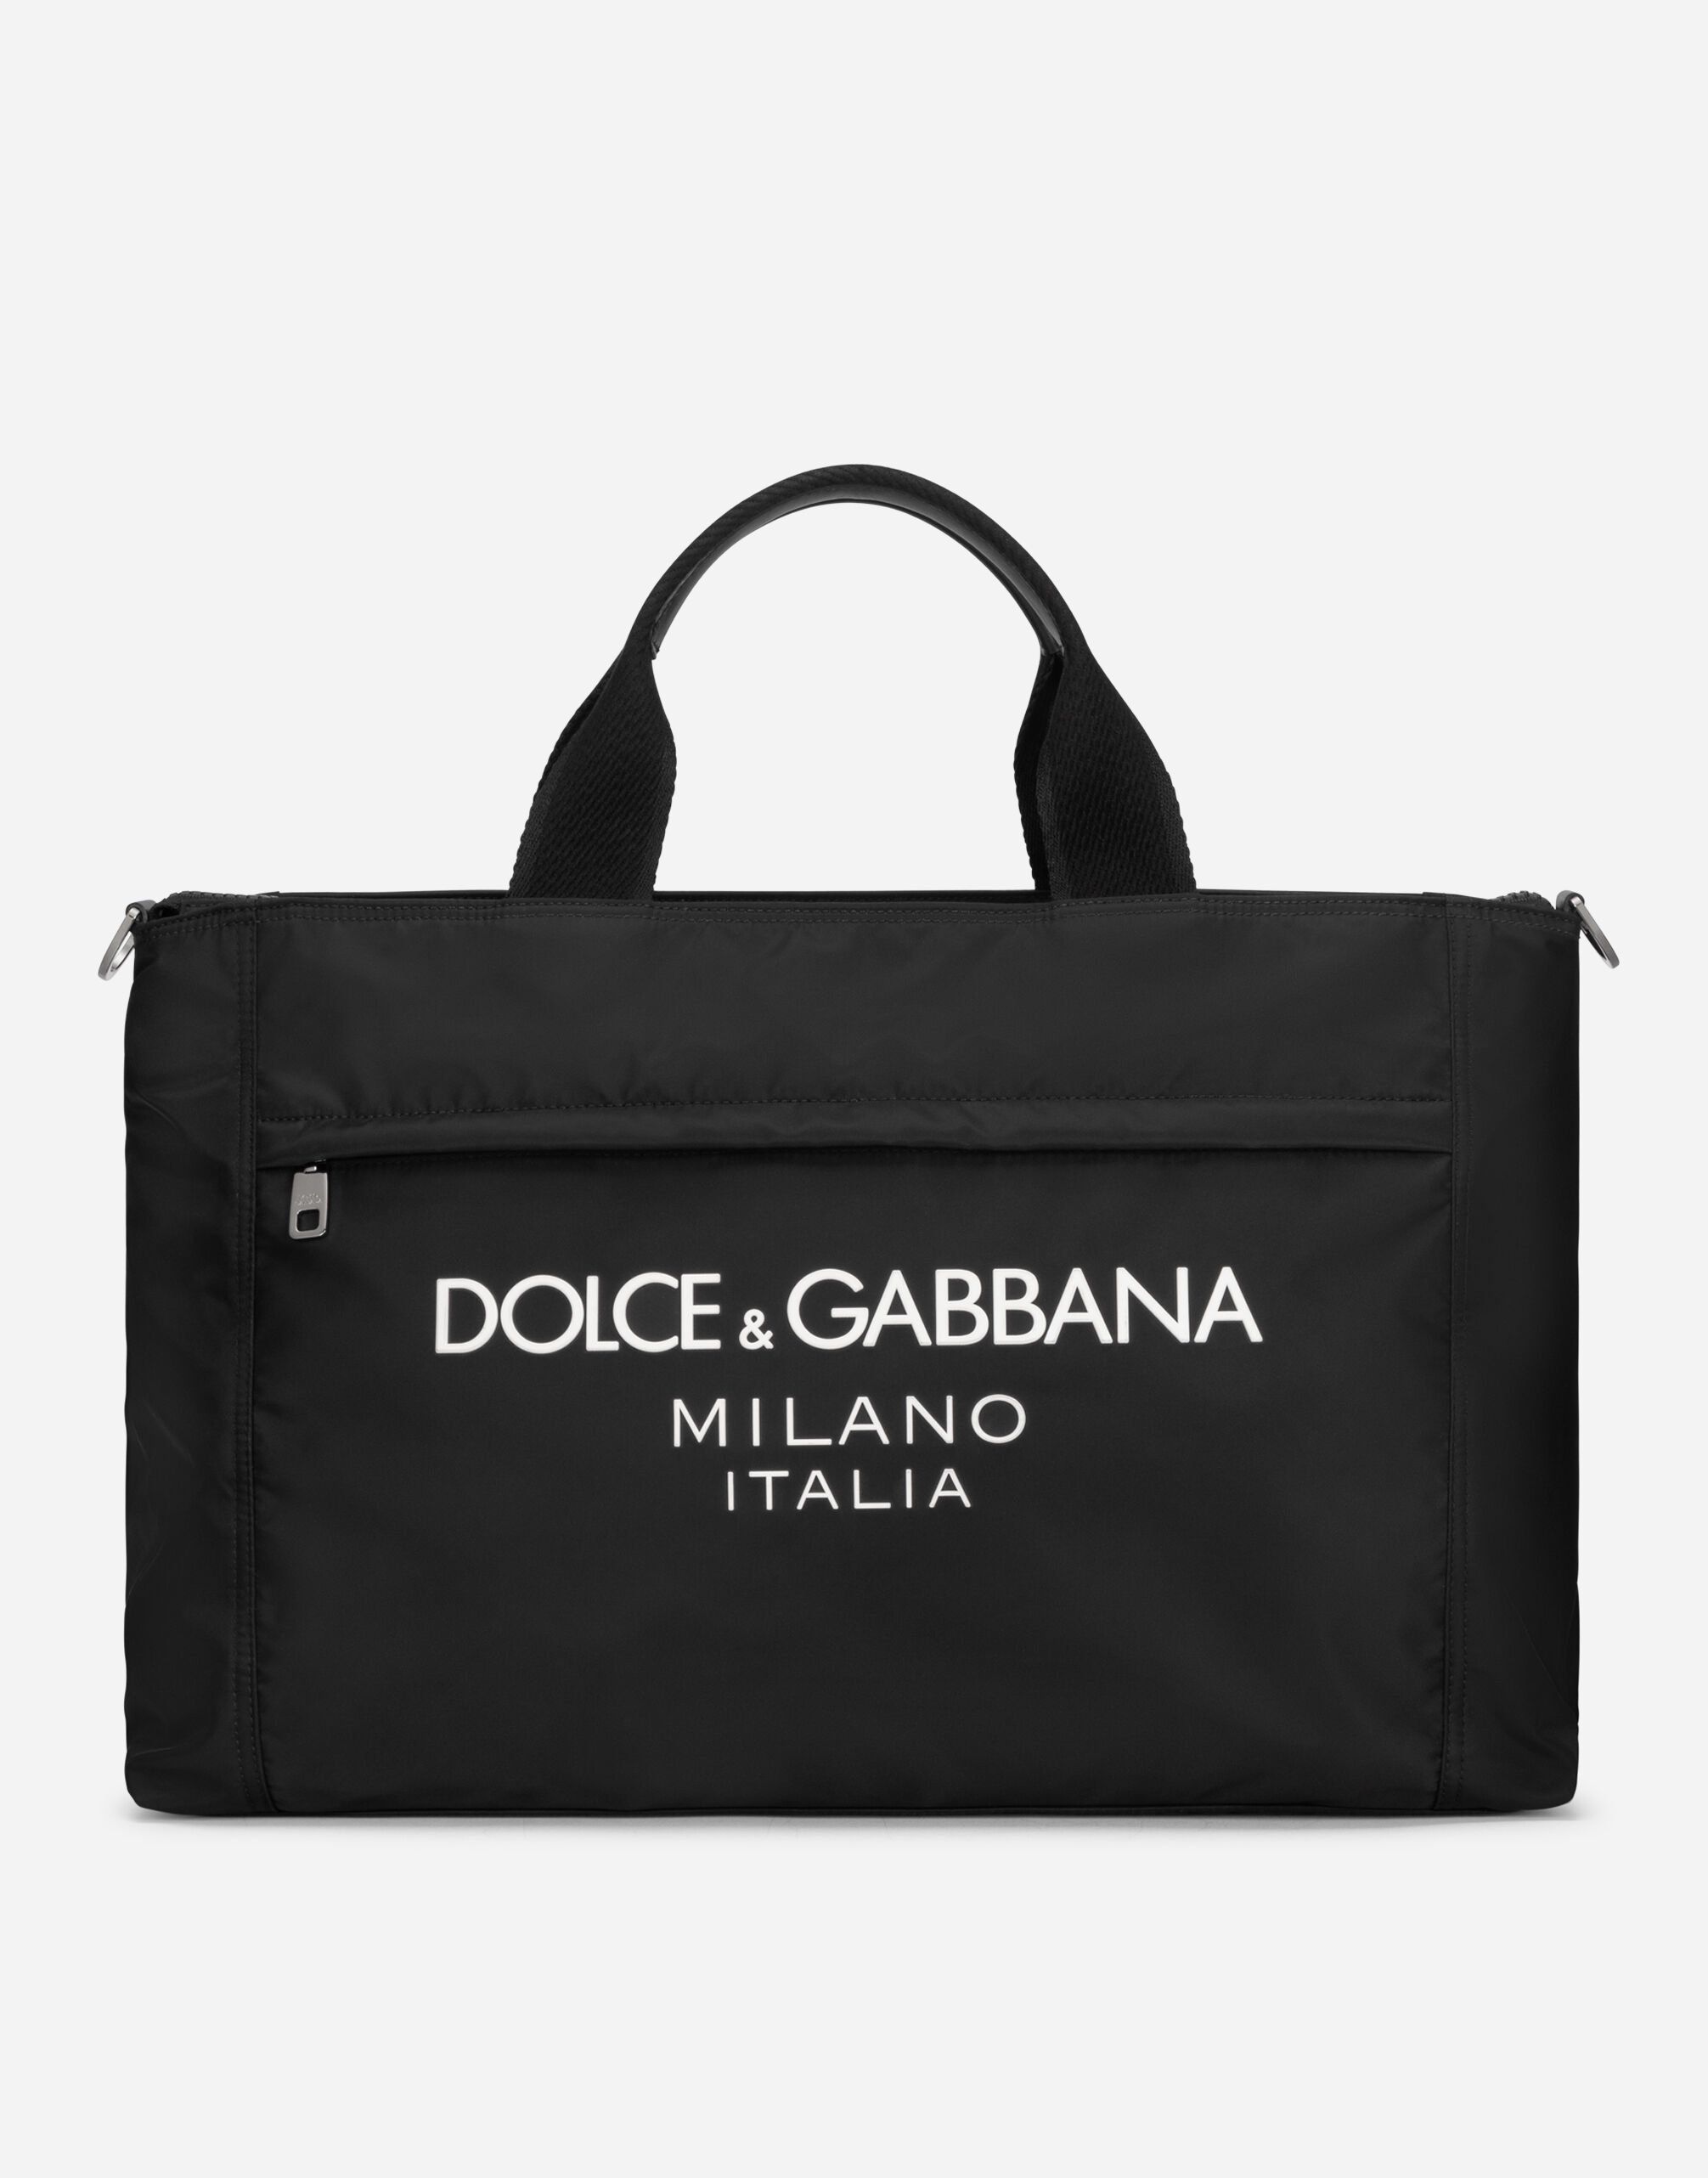 DOLCE&GABBANA ナイロン×レザー 2way トートバッグ - バッグ